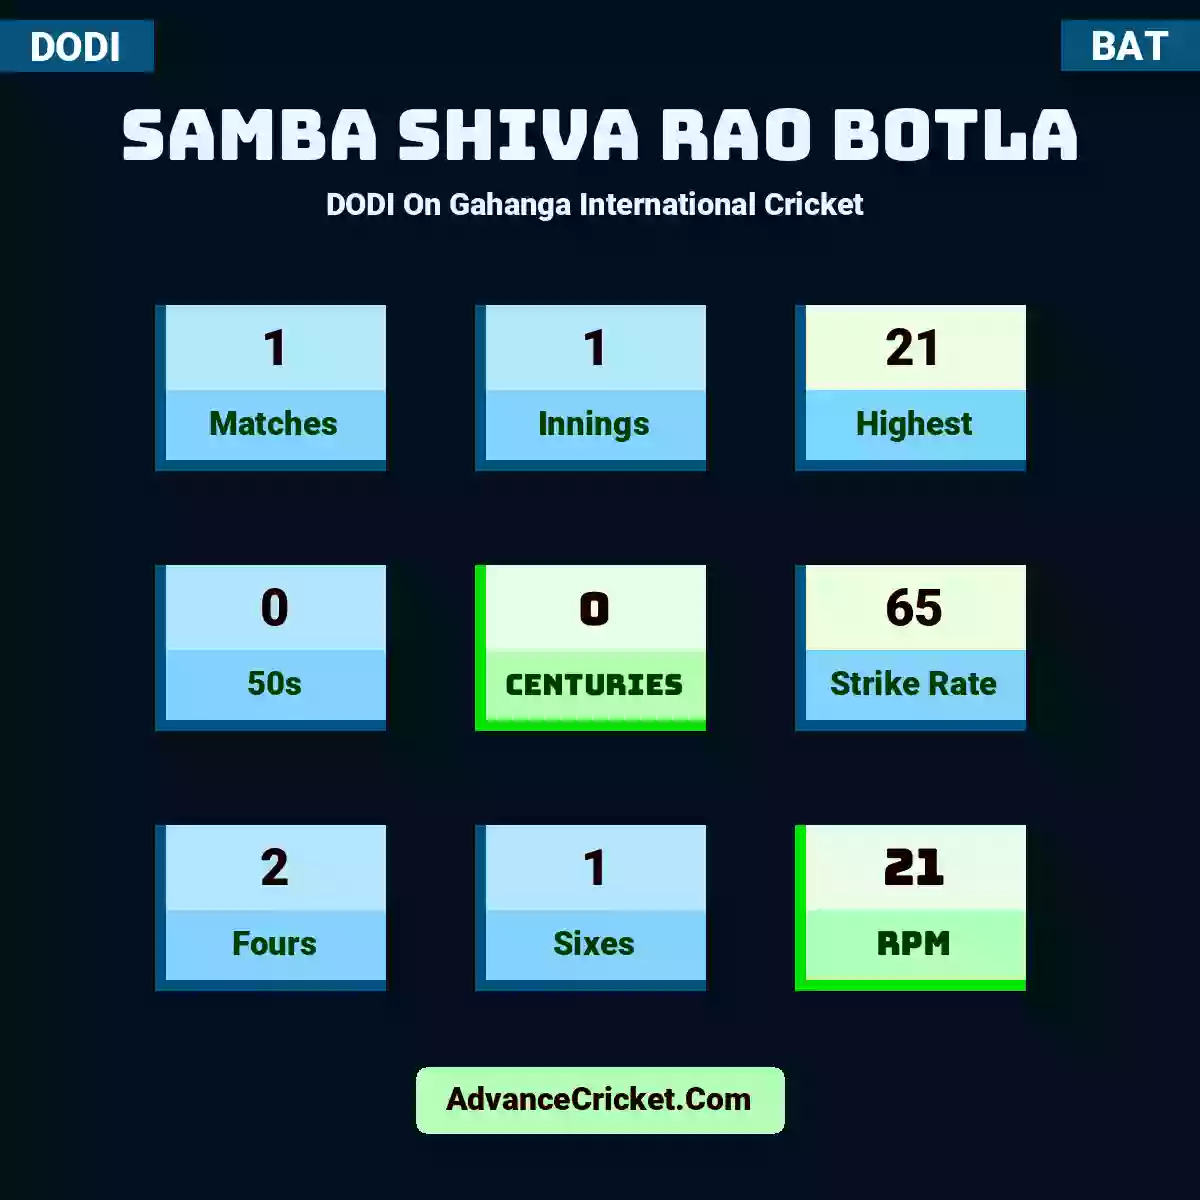 Samba Shiva Rao Botla DODI  On Gahanga International Cricket , Samba Shiva Rao Botla played 1 matches, scored 21 runs as highest, 0 half-centuries, and 0 centuries, with a strike rate of 65. S.Shiva.Rao.Botla hit 2 fours and 1 sixes, with an RPM of 21.